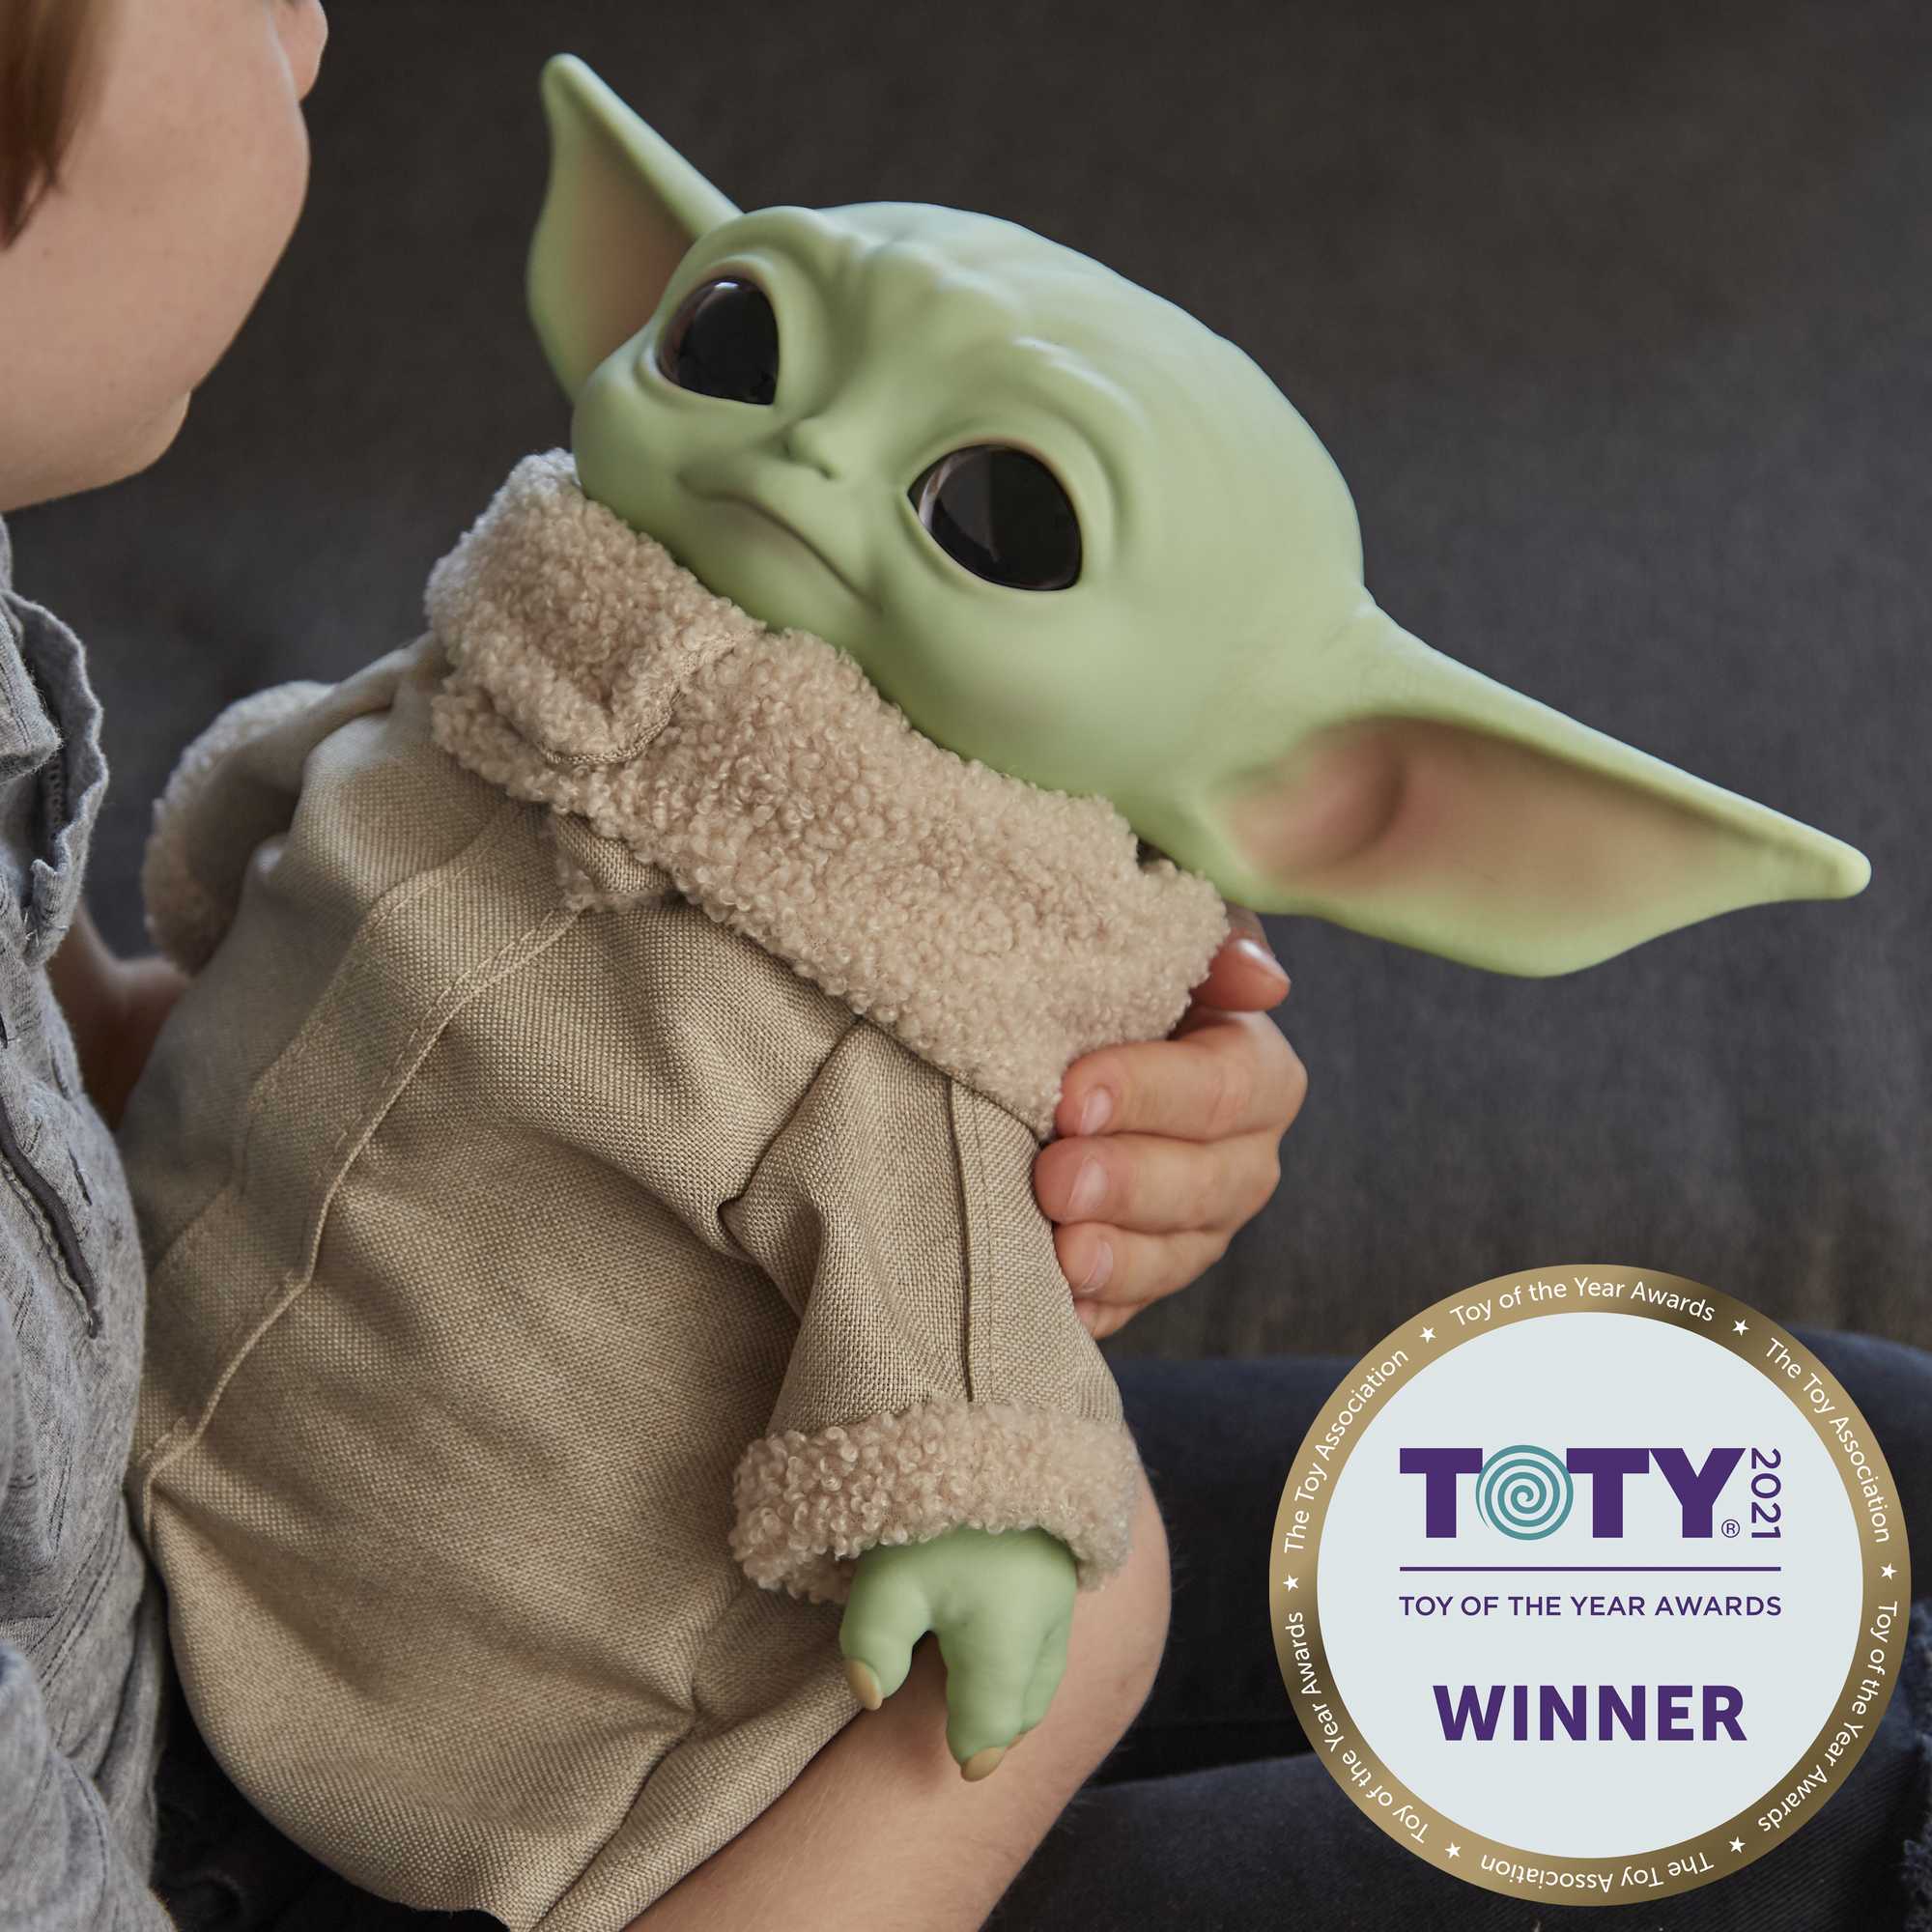 Mattel HBX33 Disney Star Wars Mandalorian The Child Baby Yoda